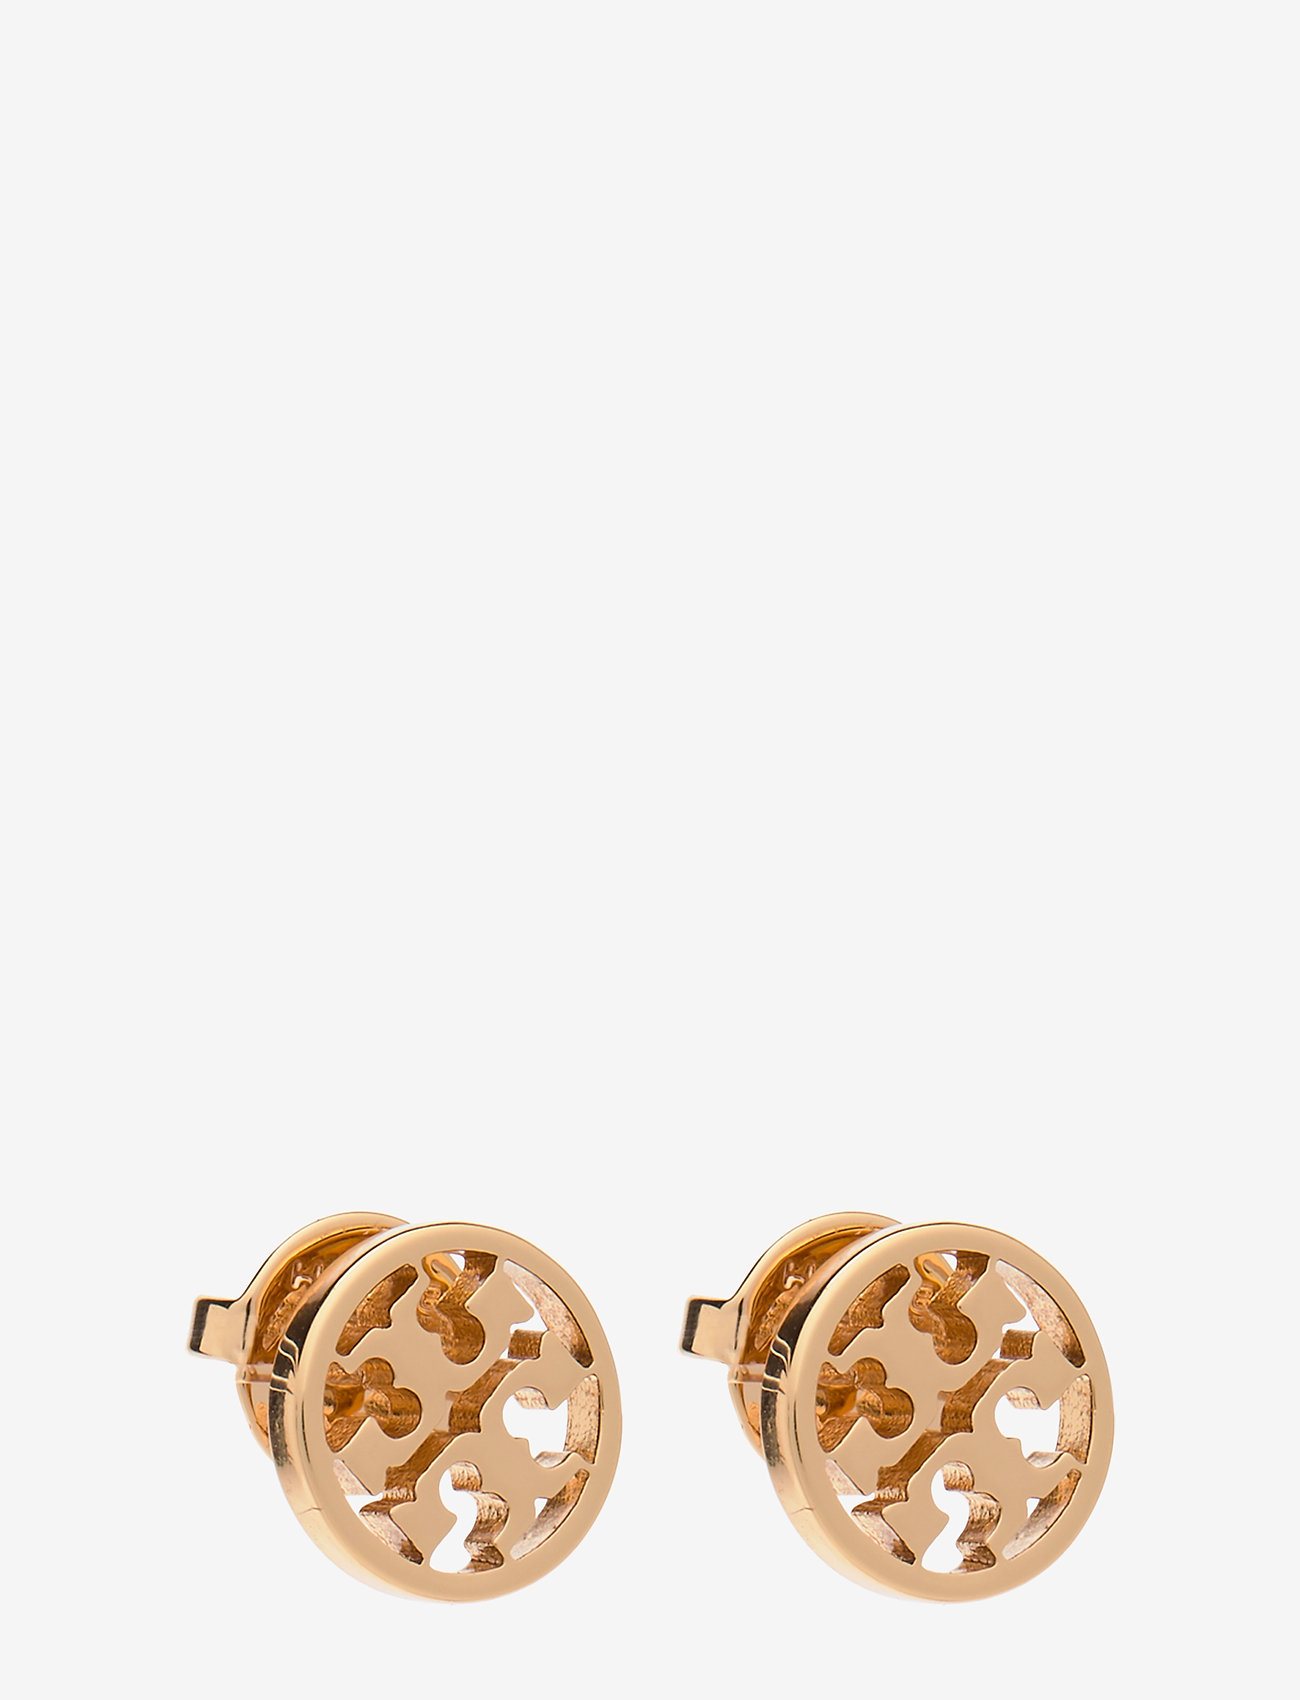 Tory Burch Miller Stud Earring (Tory Gold) - 895 kr | Boozt.com